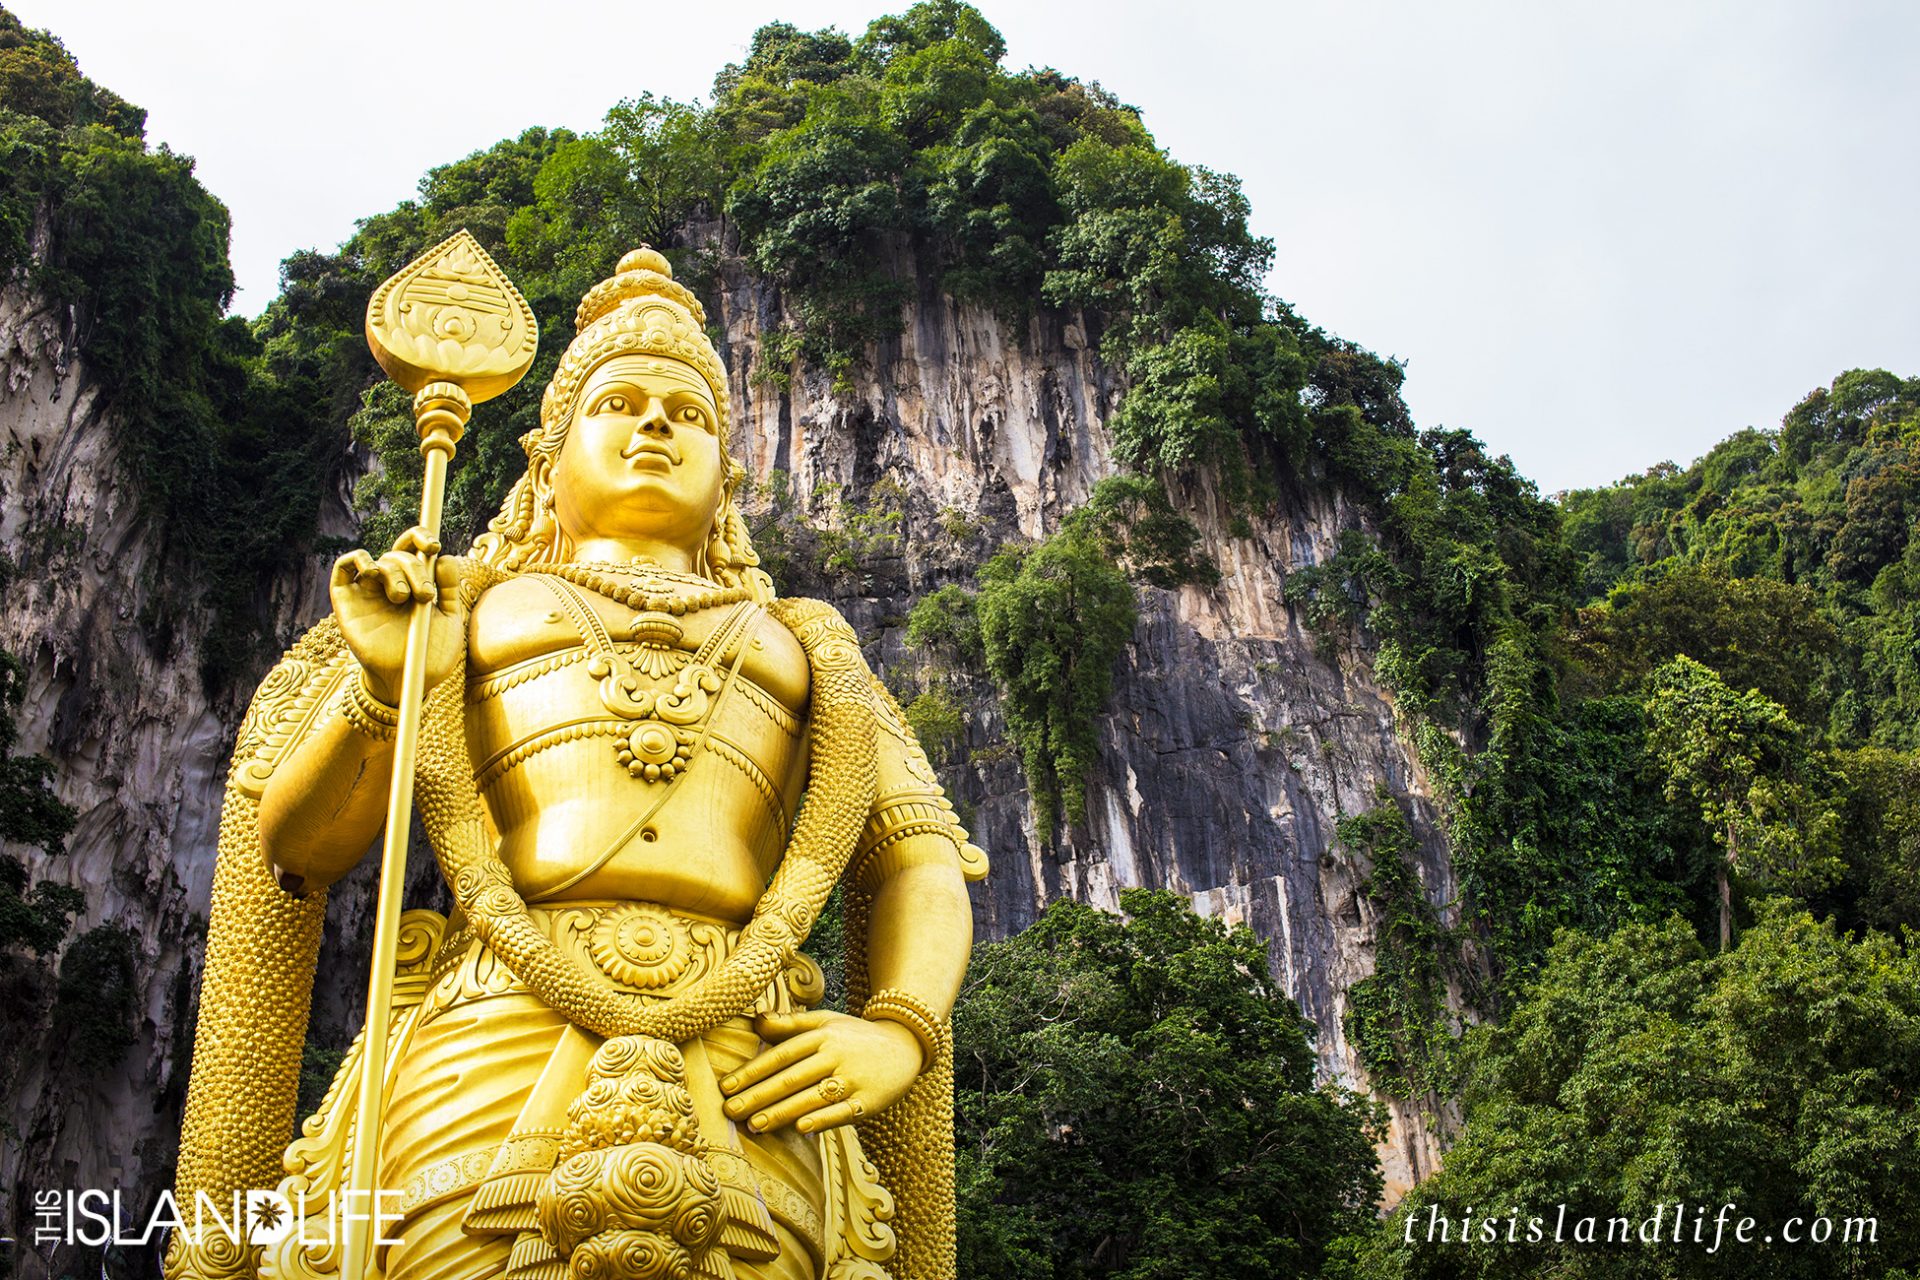 THIS ISLAND LIFE | Exploring the epic Batu Caves in Malaysia